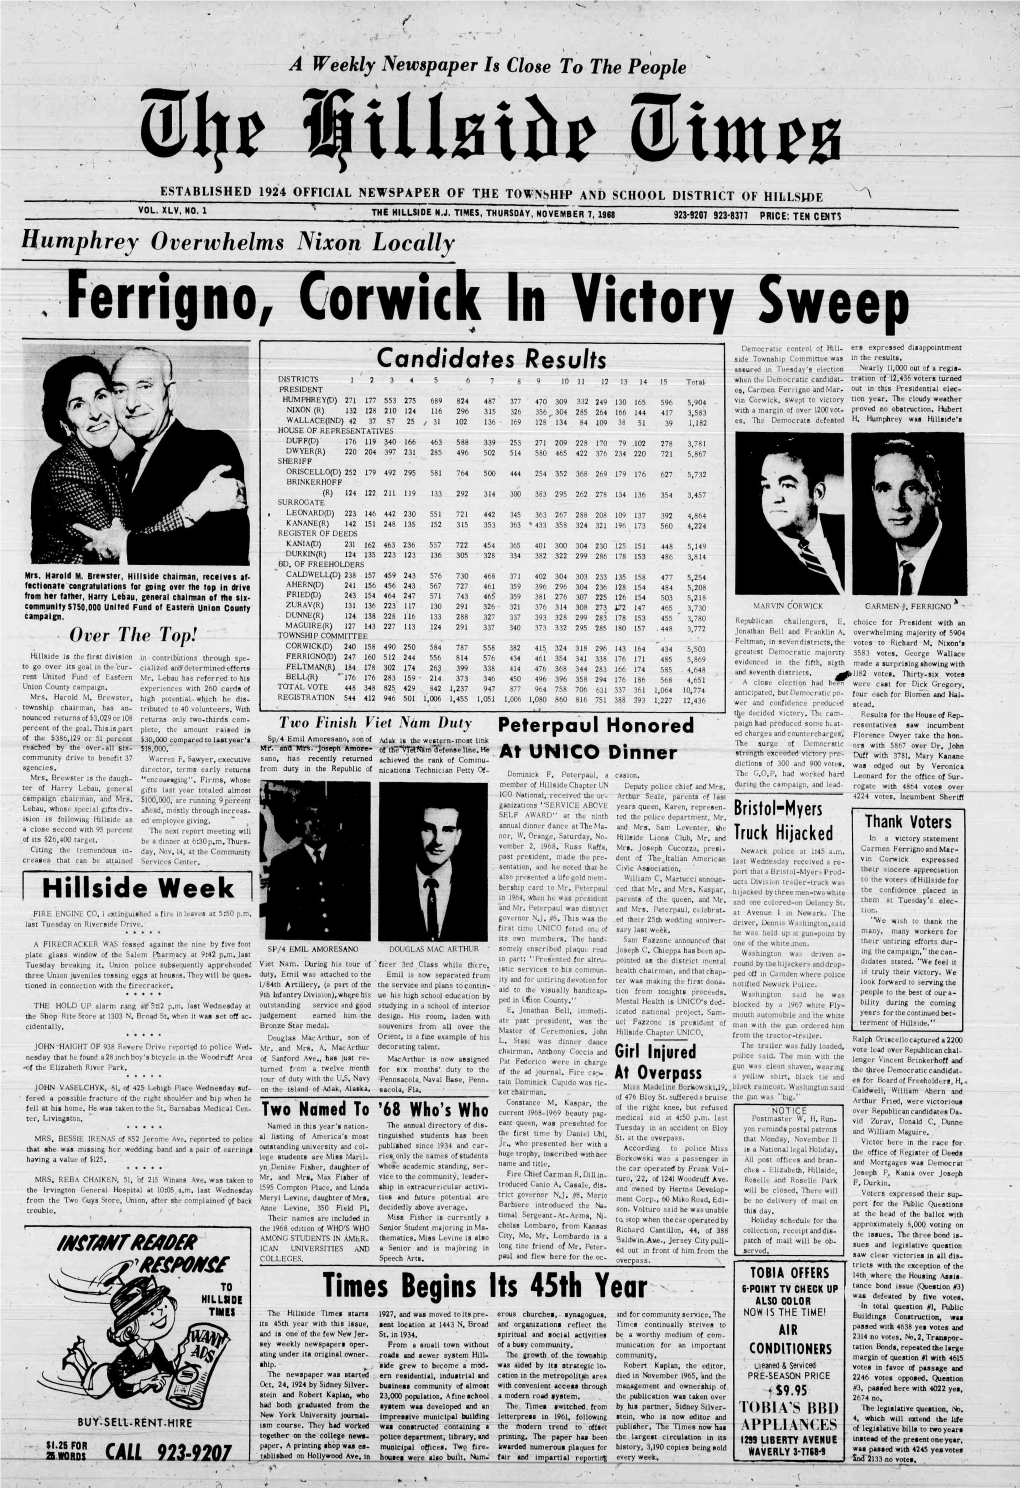 Ferrigno, Corwick in Victory Sweep